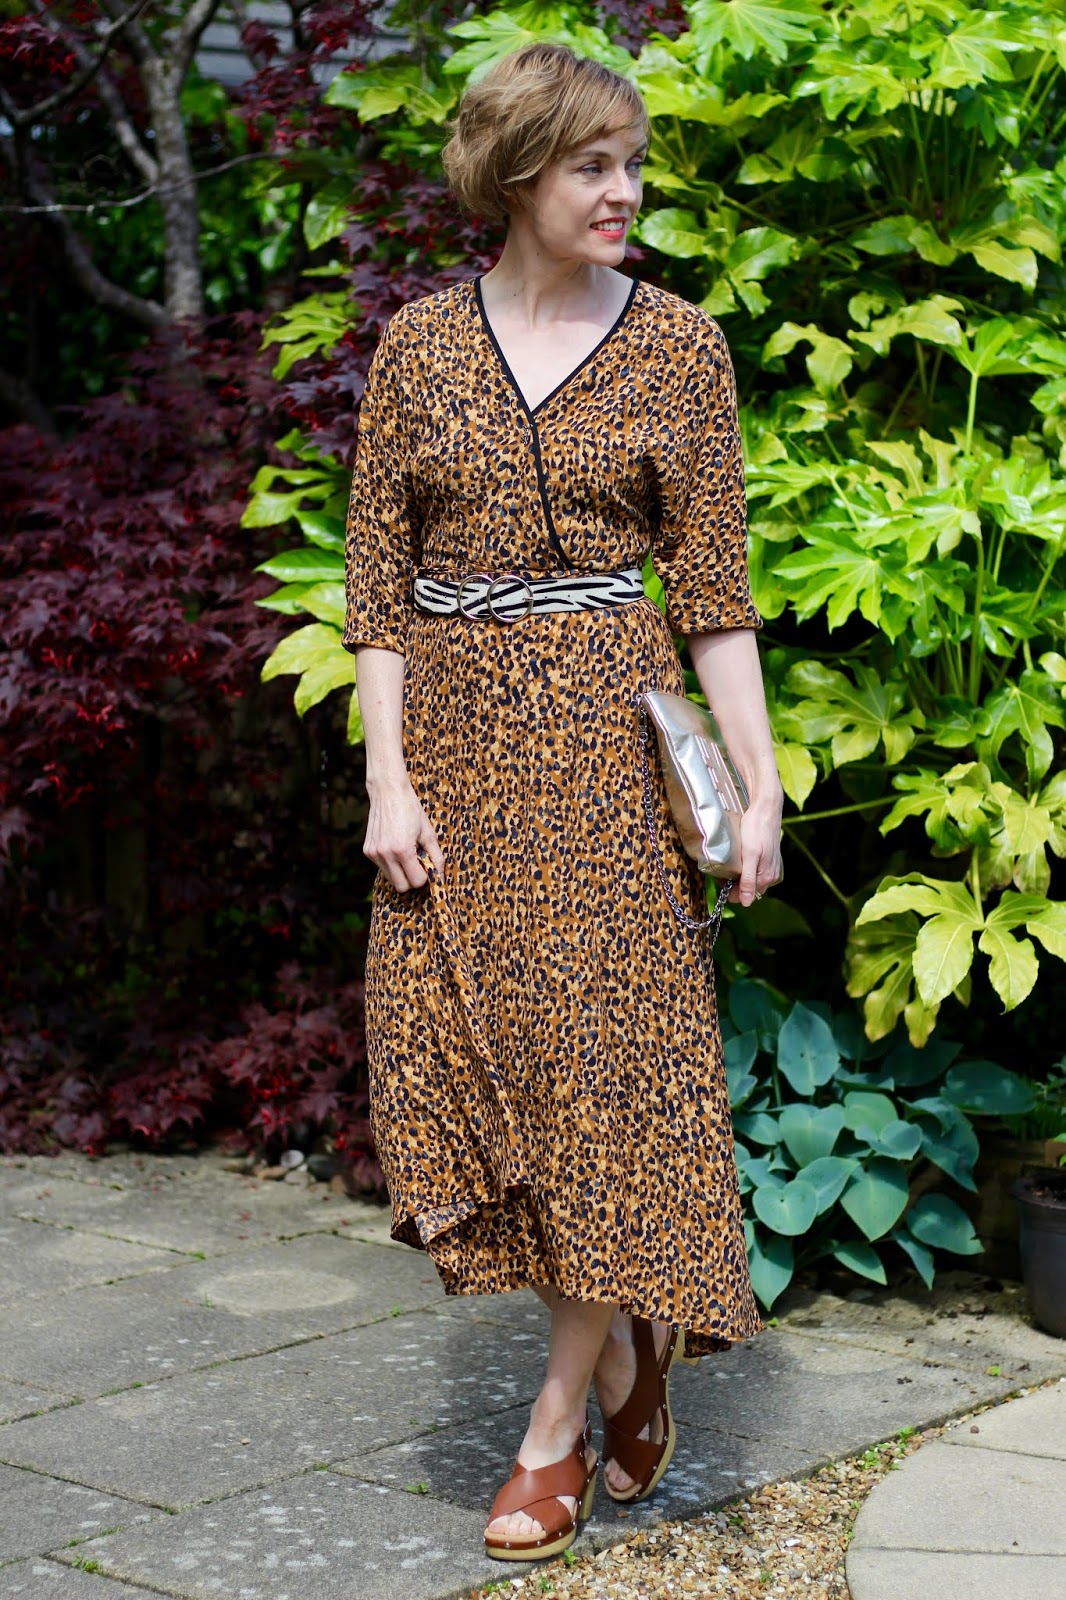 Leopard midi dress, zebra belt and tan sandals | Fake Fabulous